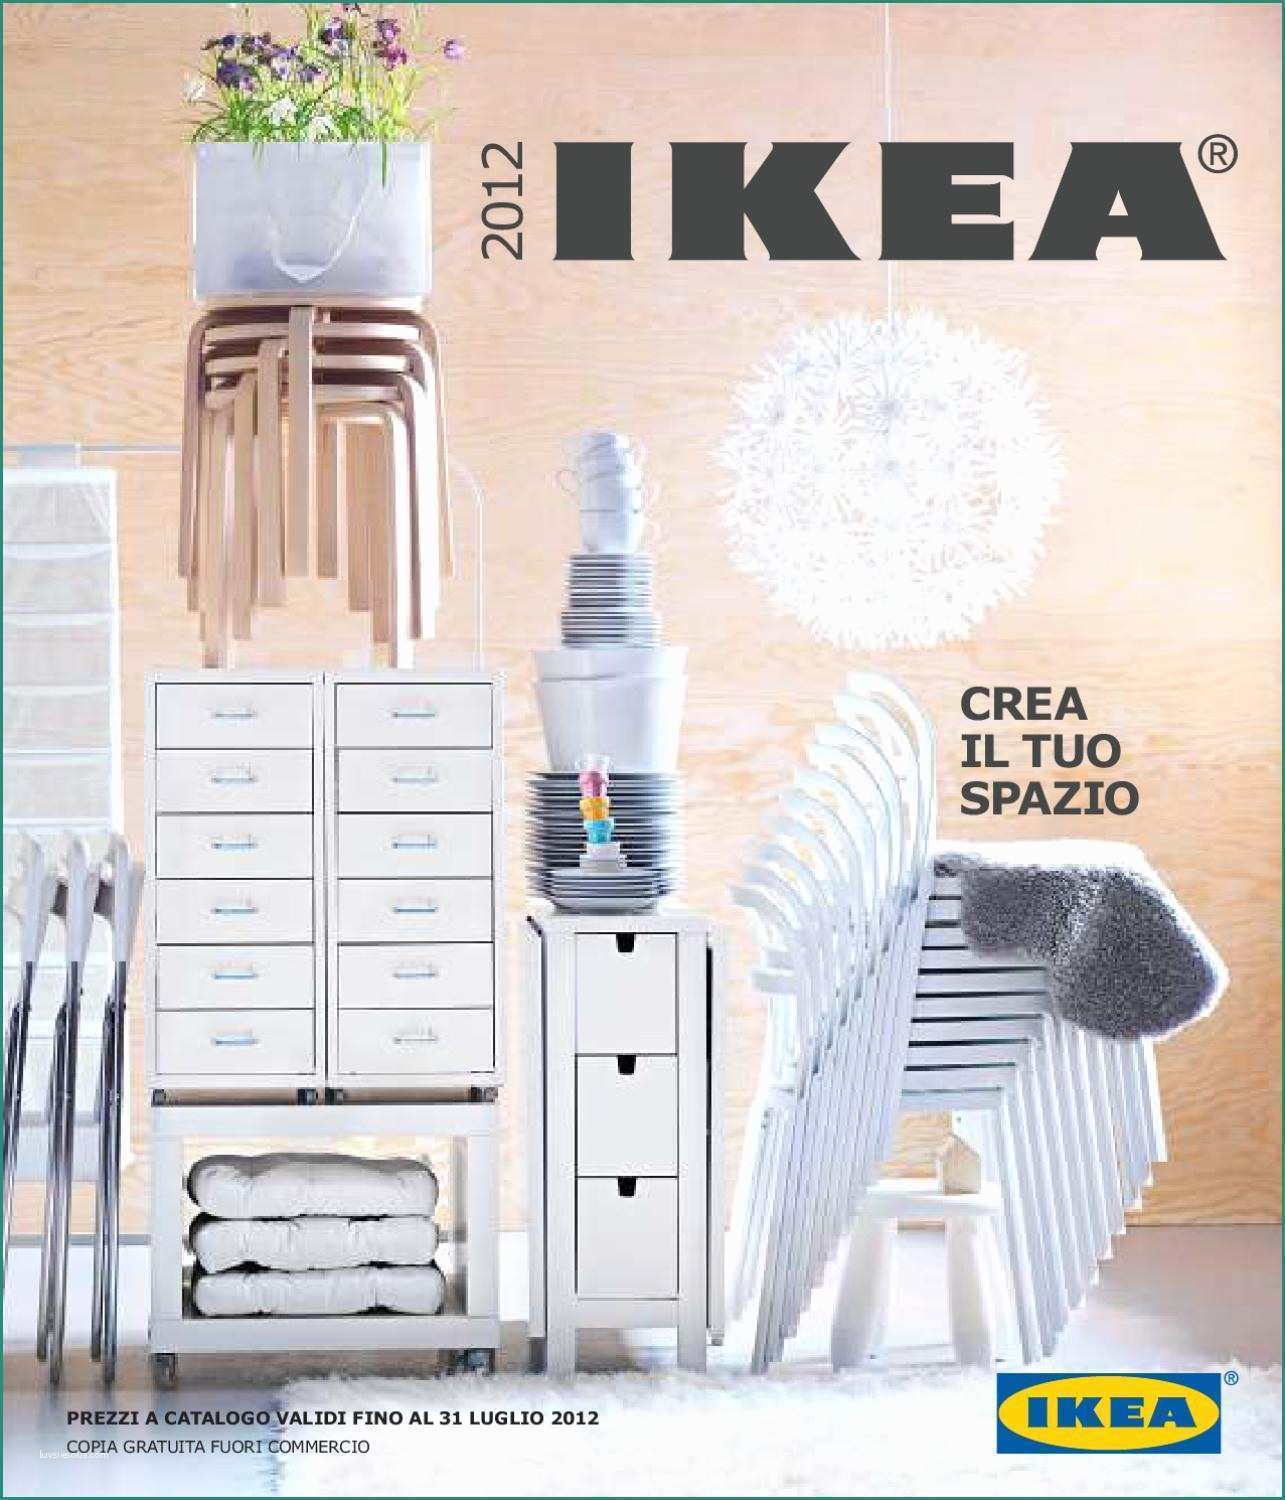 Libreria Profondita Cm E Ikea Catalogo 2012 by Mercializzando toscana issuu